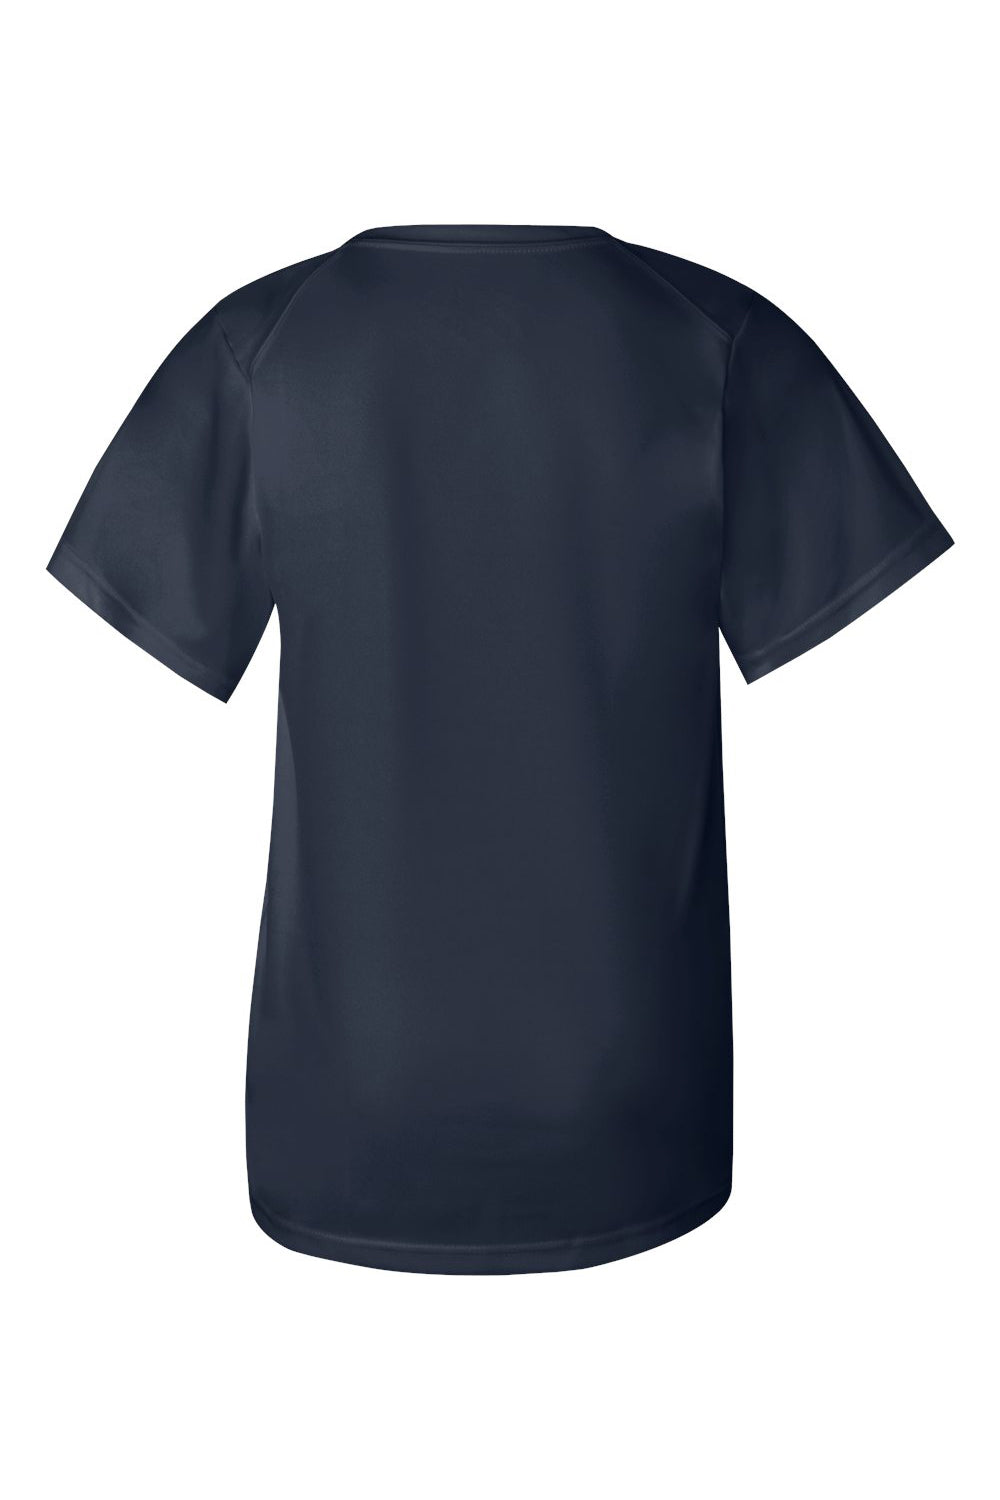 Badger 2120 Youth B-Core Moisture Wicking Short Sleeve Crewneck T-Shirt Navy Blue Flat Back